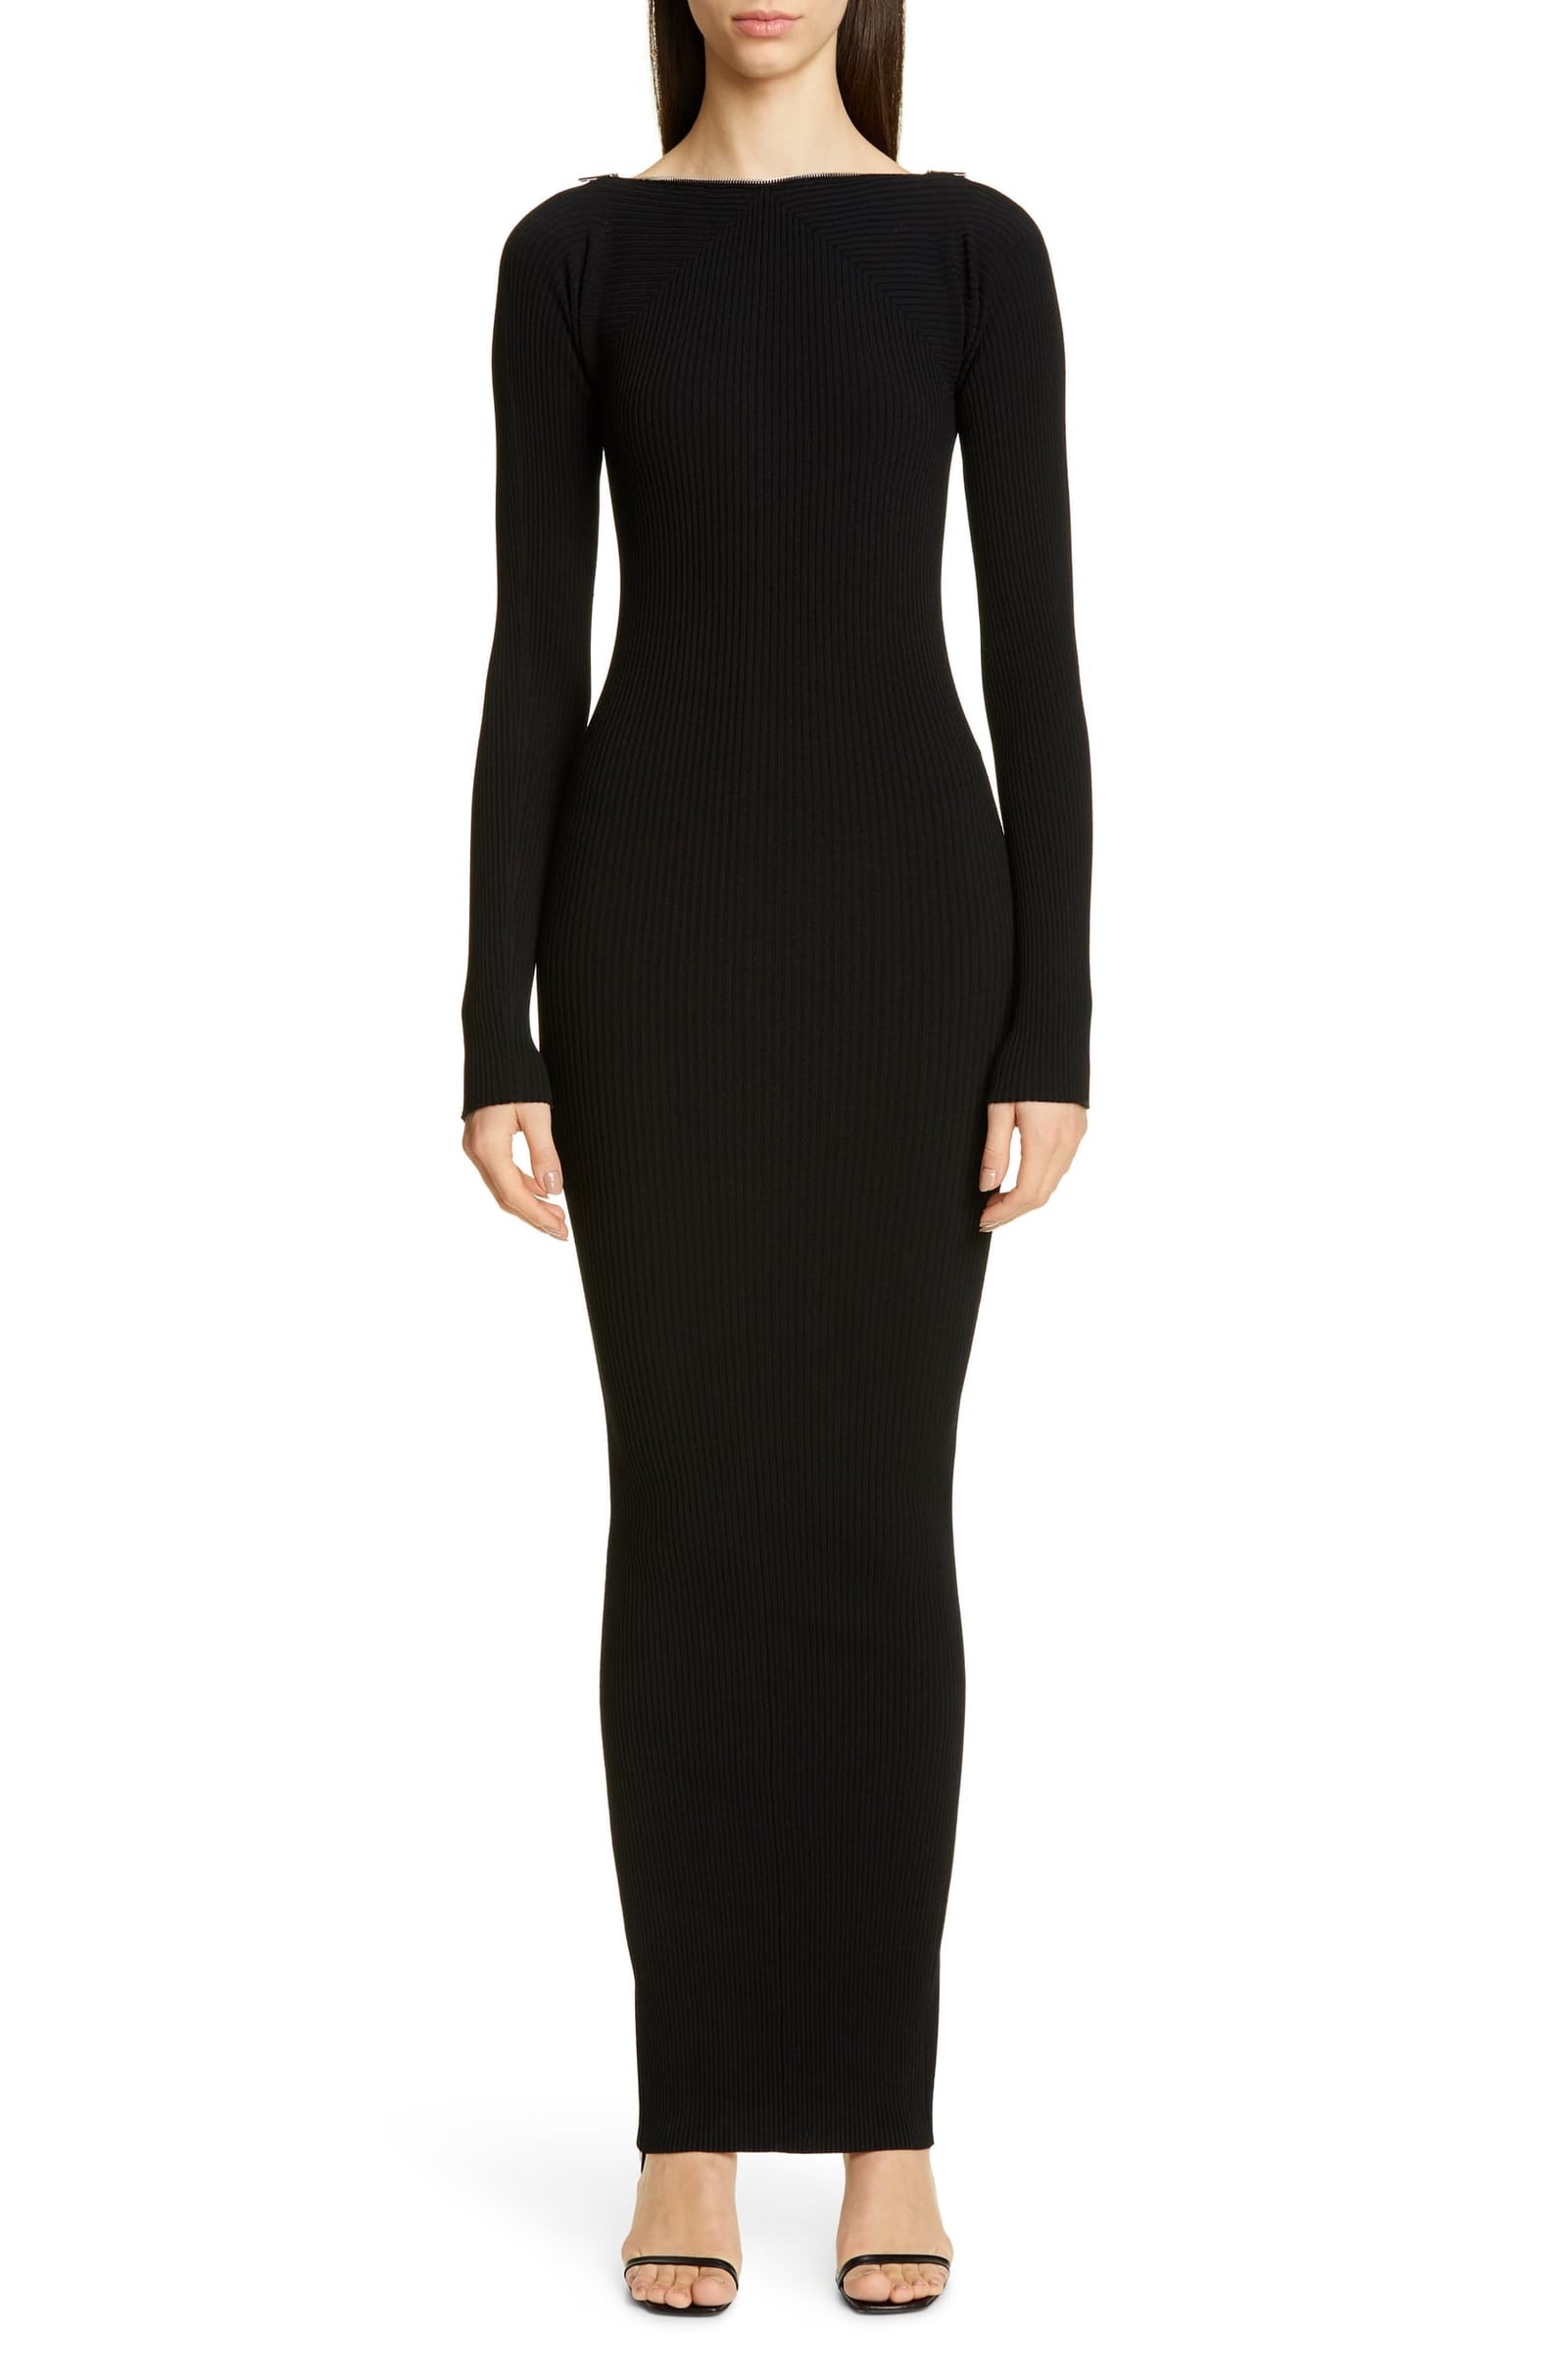 Kylie Jenner's Black Maxi Dress Is a Fall Staple, Hands Down | POPSUGAR ...